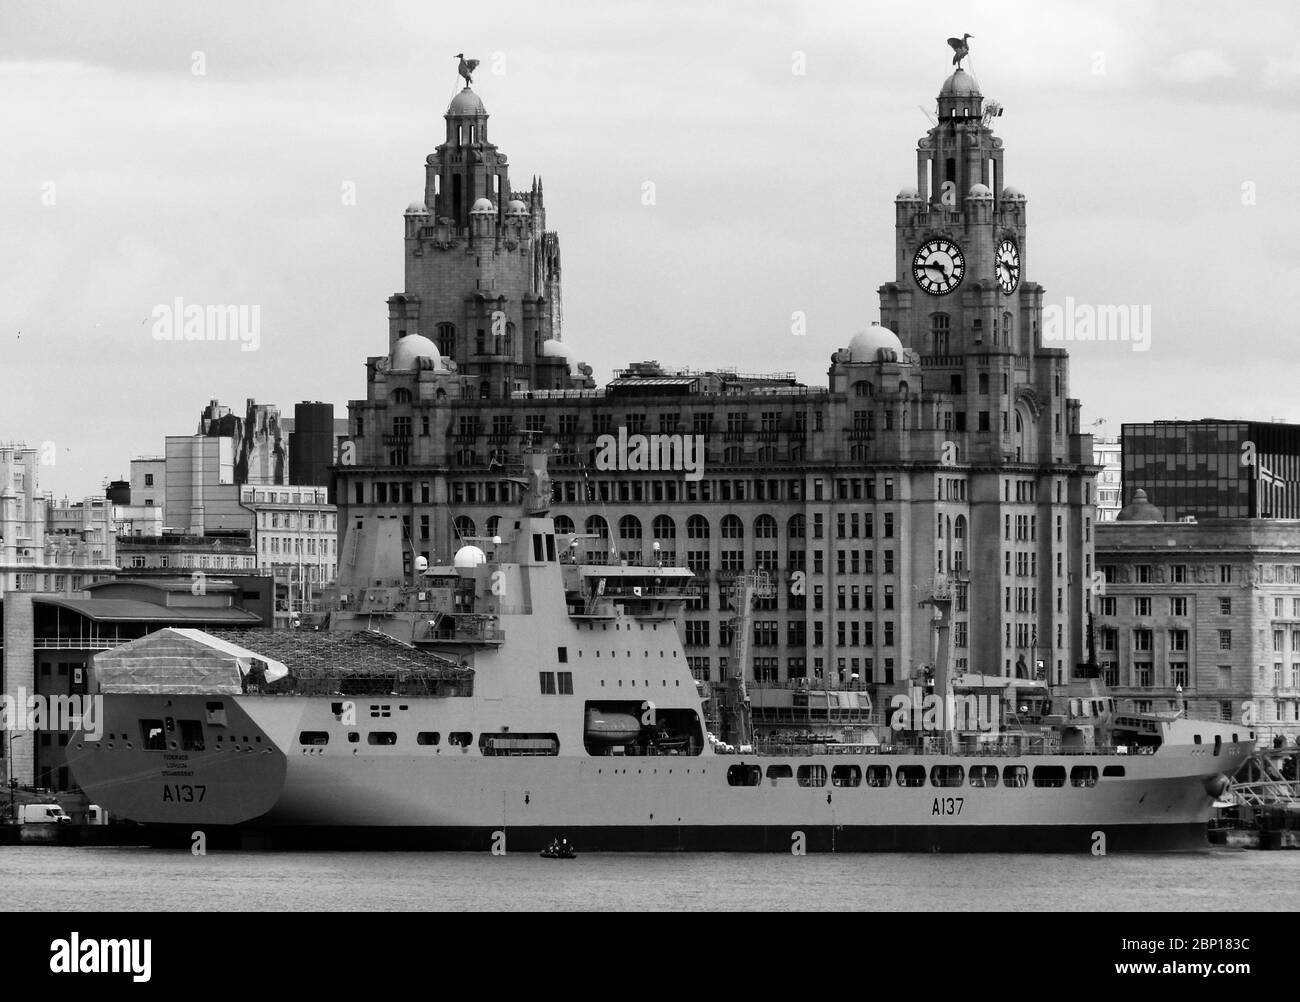 Transport in Liverpool credit Ian fairbrother/Alamy Stock photos Stock Photo